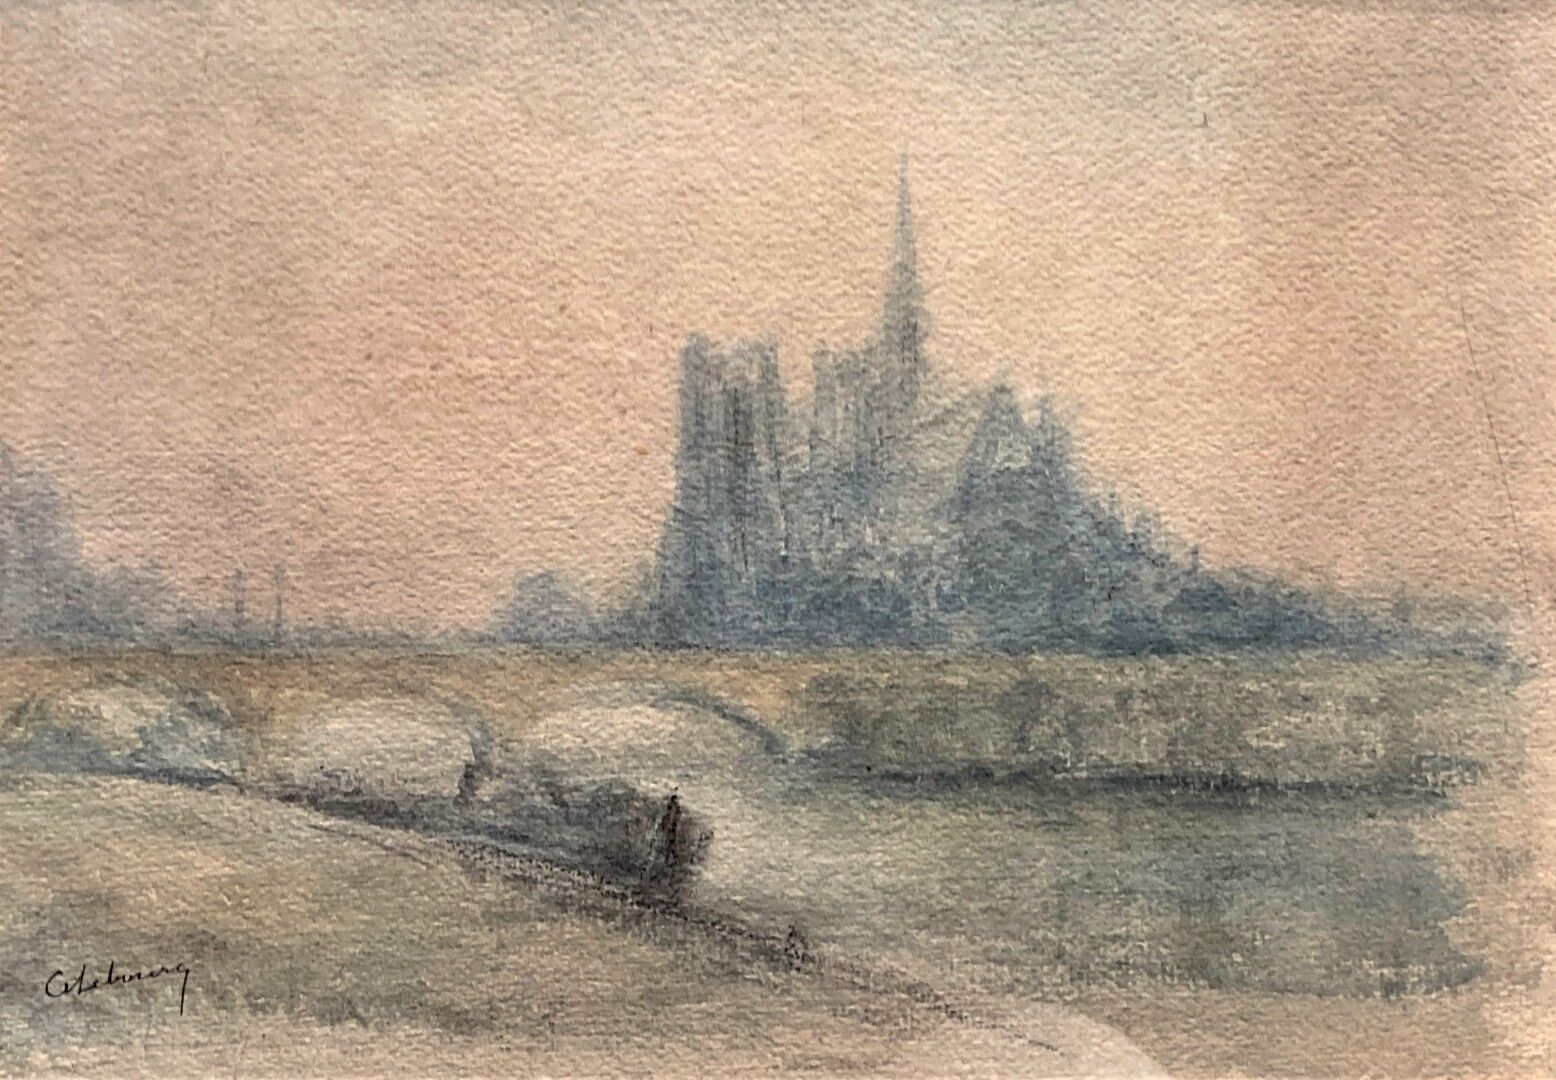 Null Albert Marie LEBOURG (1849-1928)

Notre-Dame vista desde los muelles

Acuar&hellip;